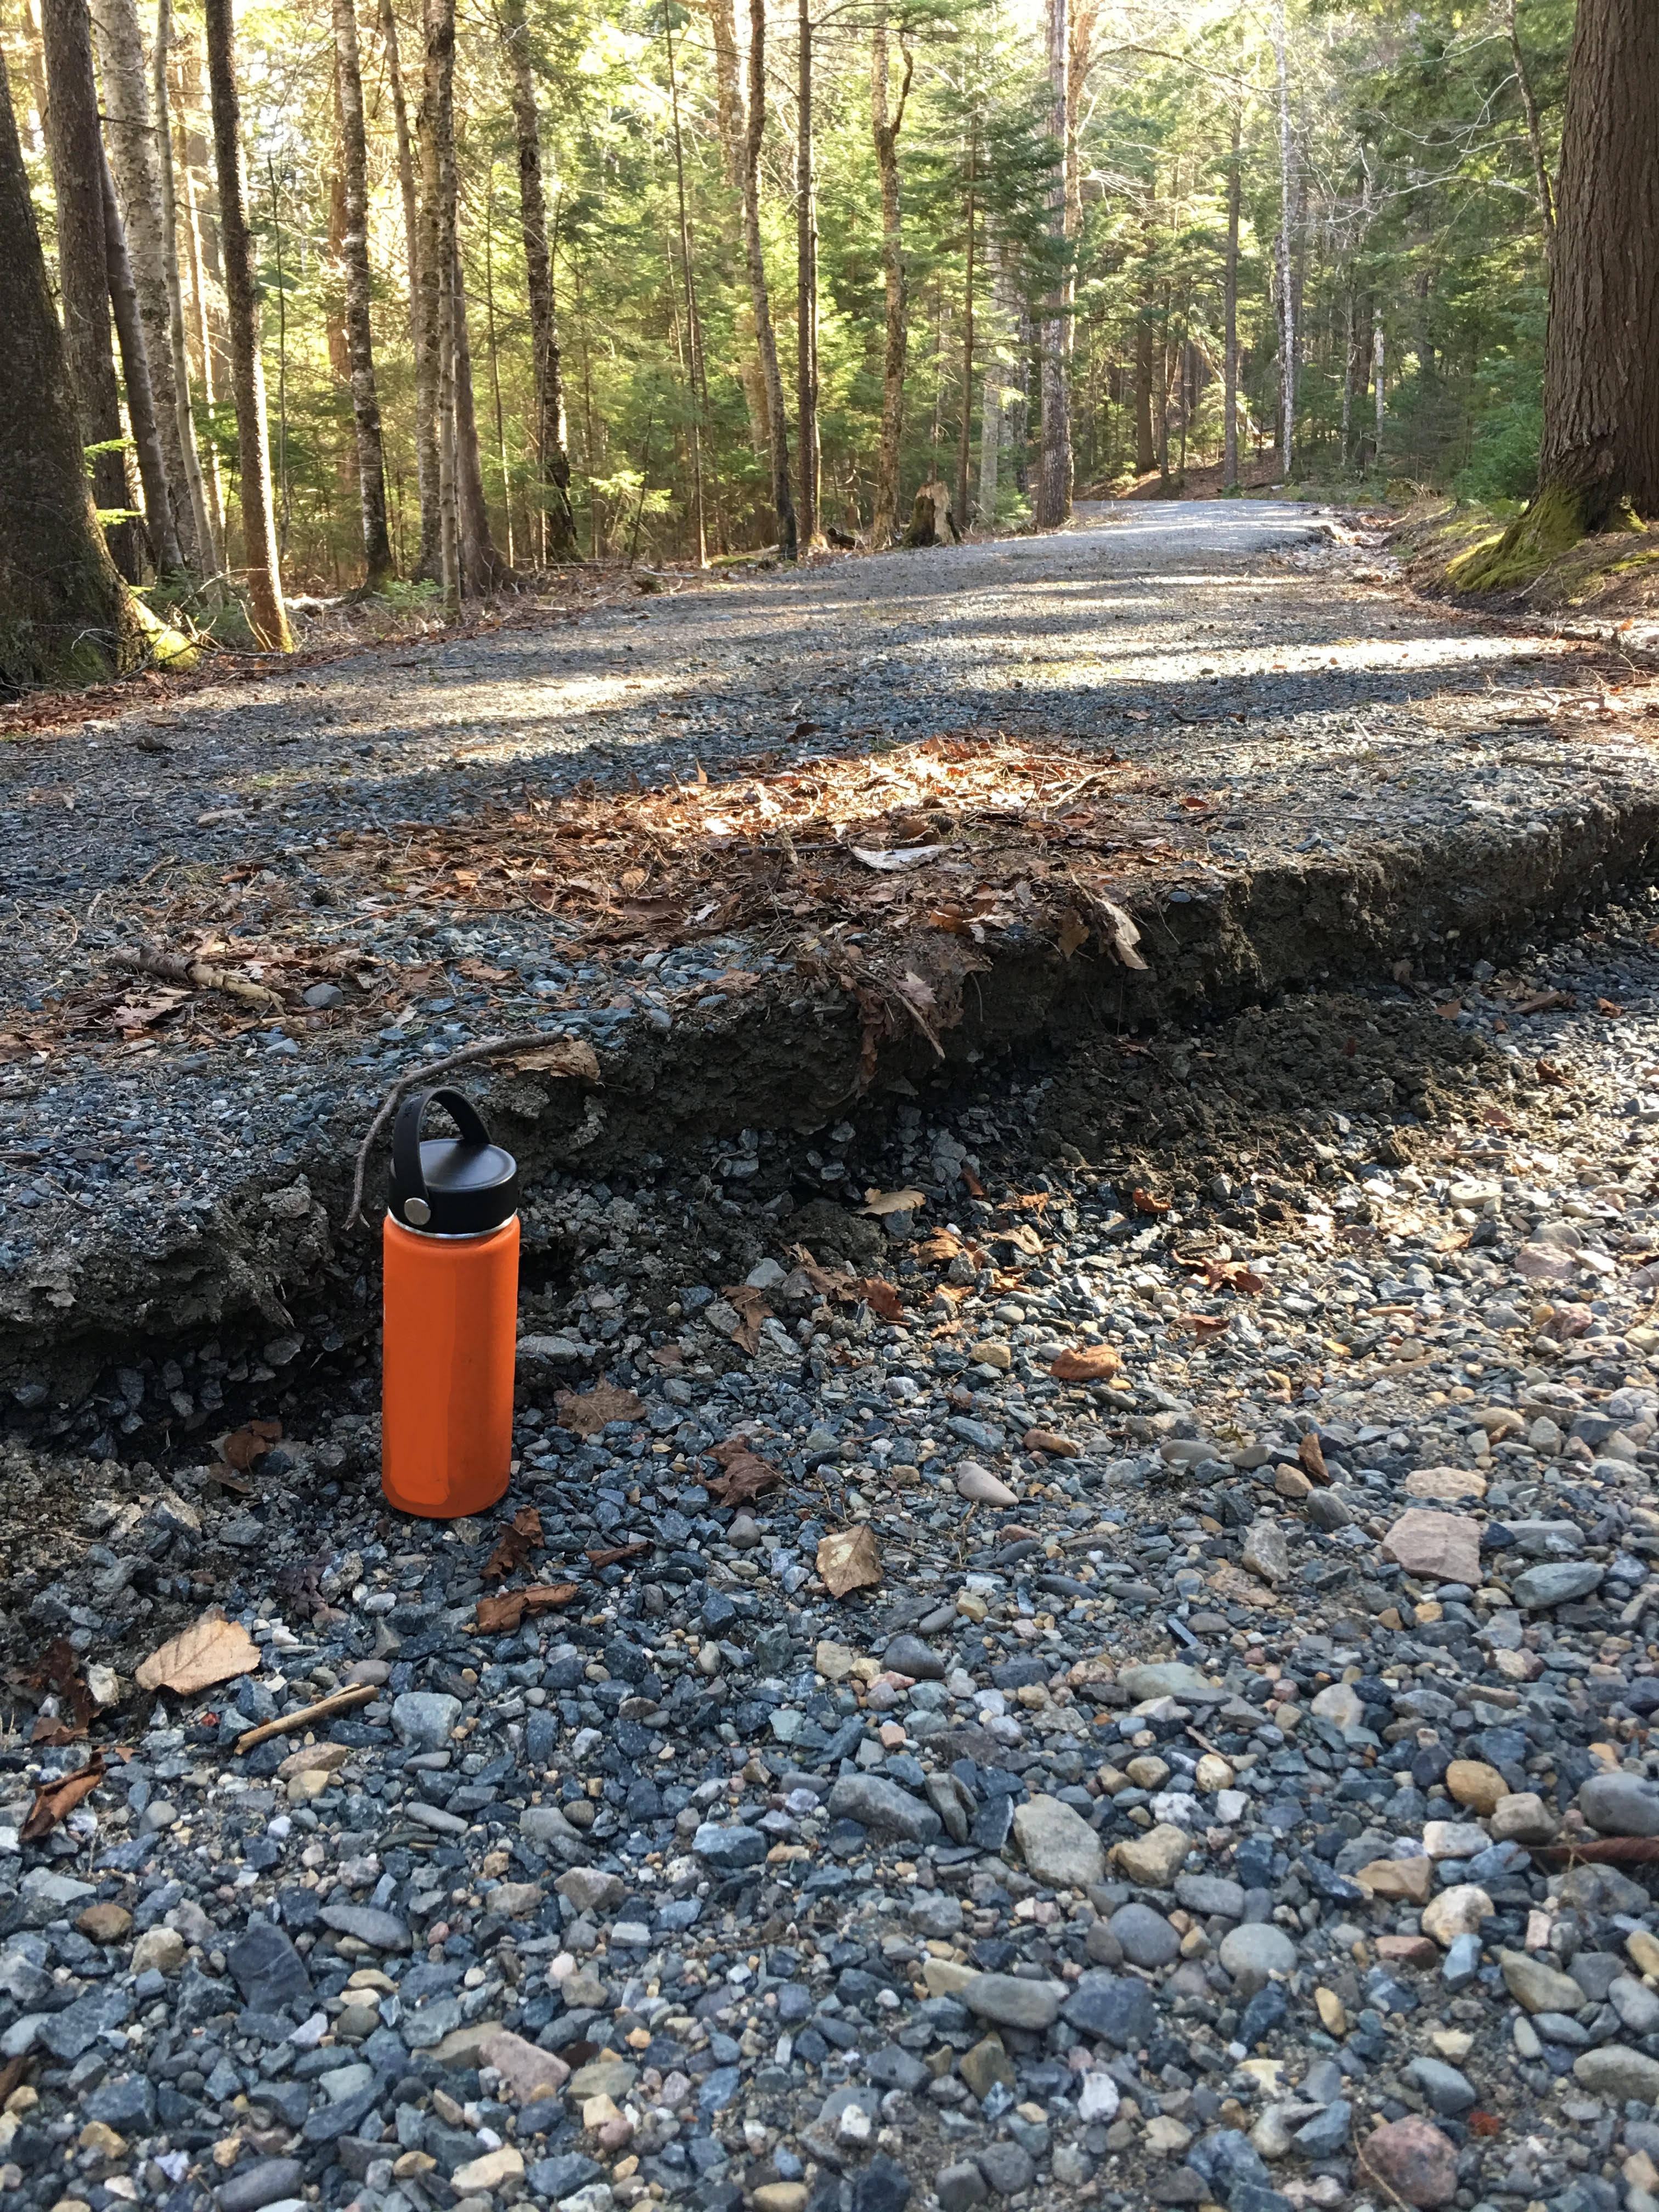 Damaged road with asphalt crumbling sharply to gravel